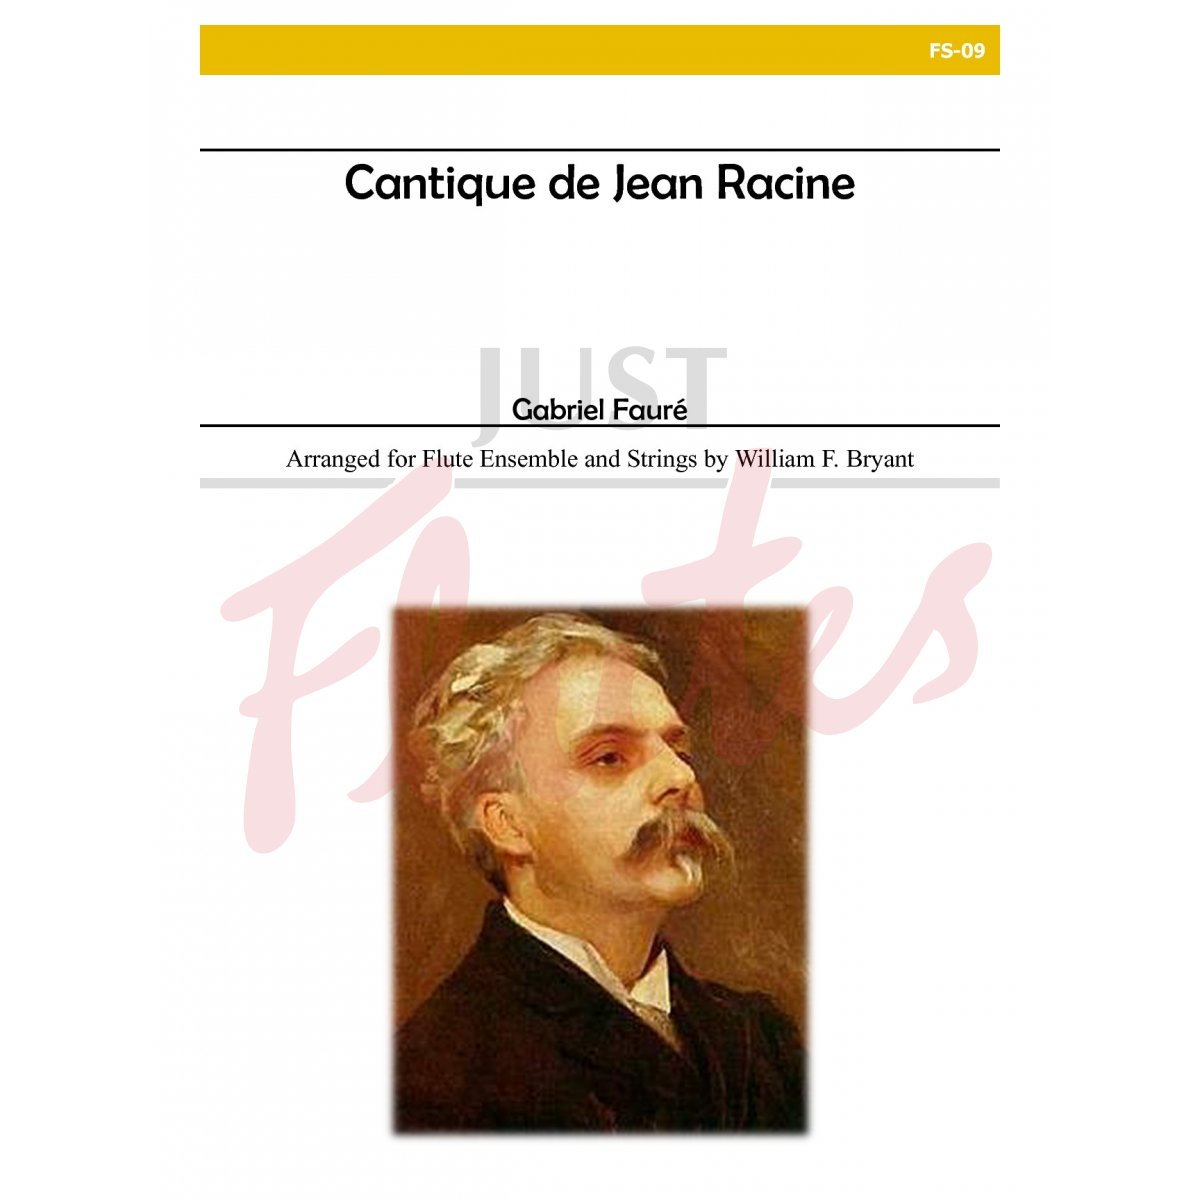 Cantique de Jean Racine for Flutes and Strings